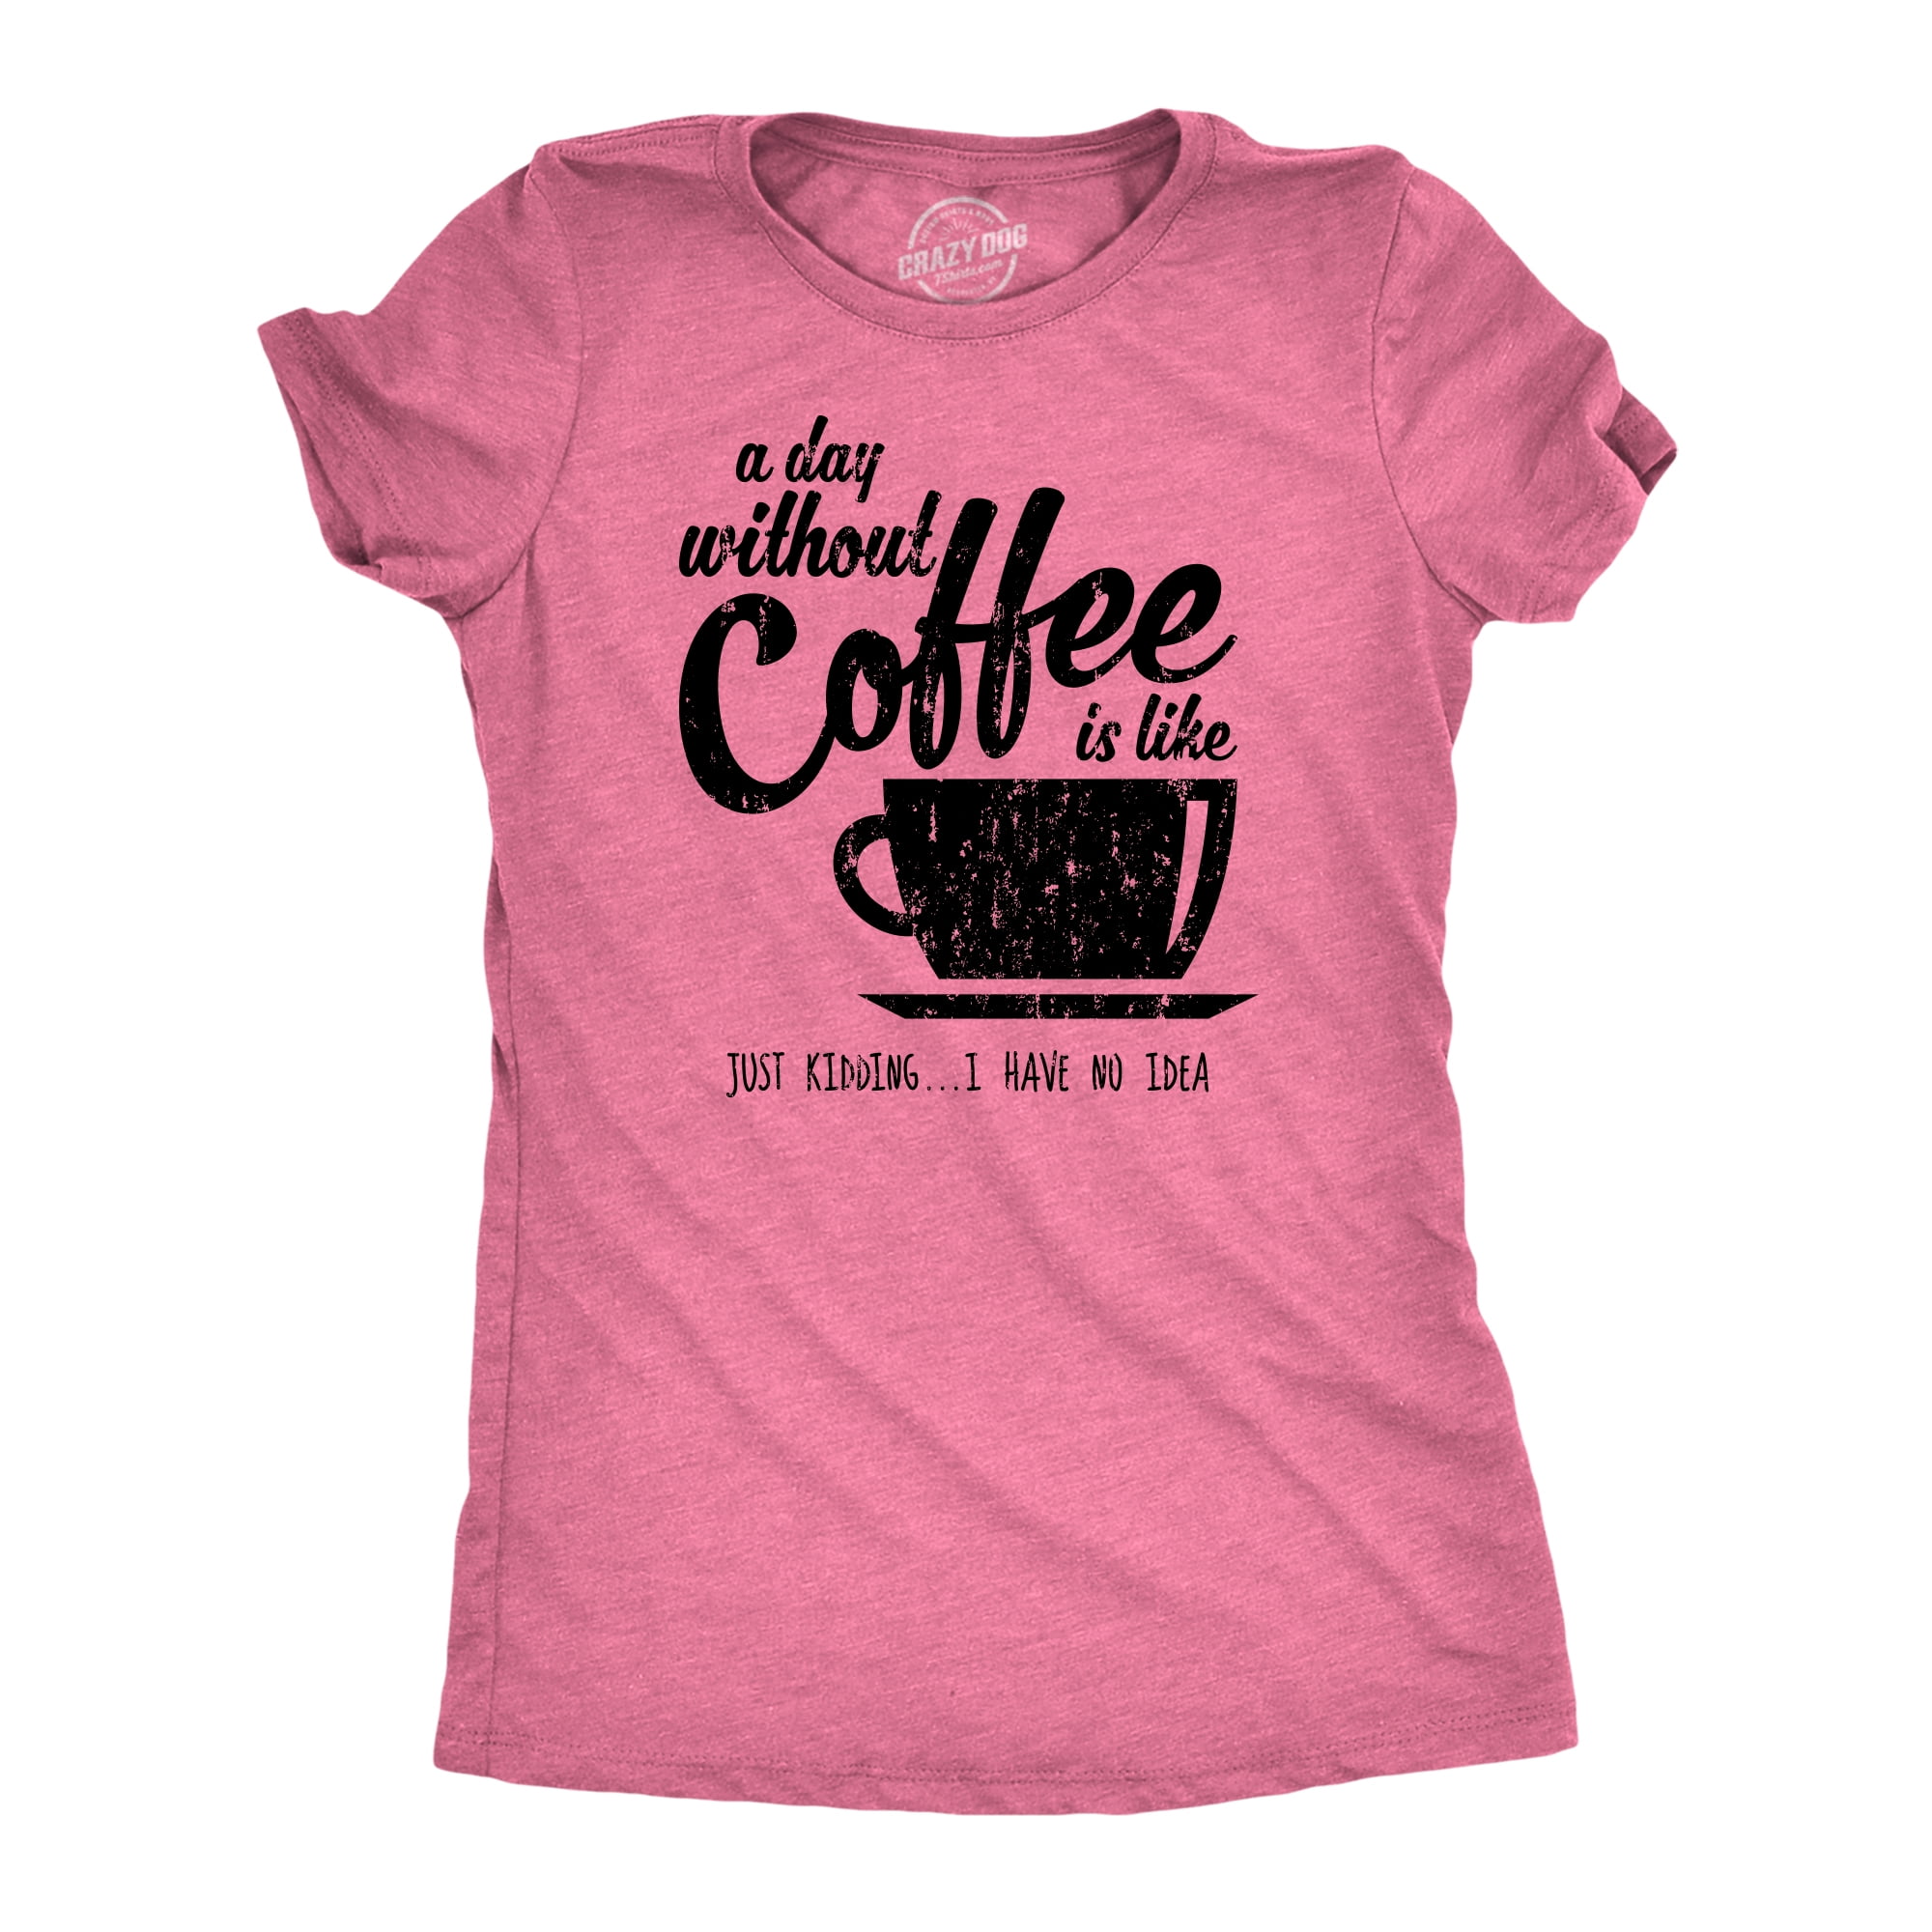 My Blood Type Is Starbucks Funny Humor Coffee Addict Joke Parody Juniors T-shirt